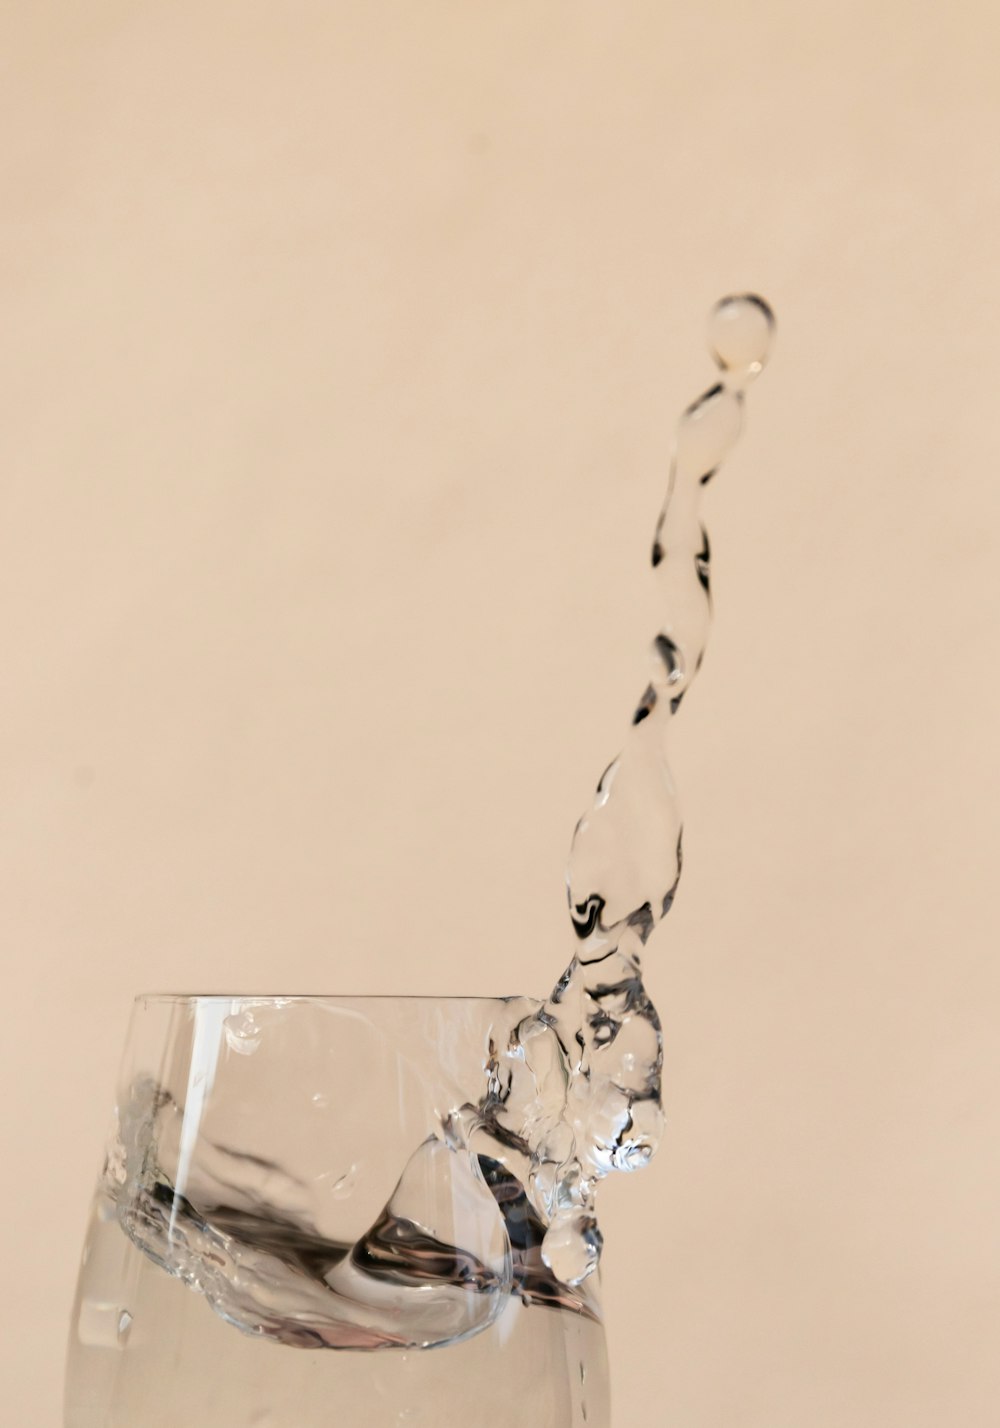 water splash on clear drinking glass